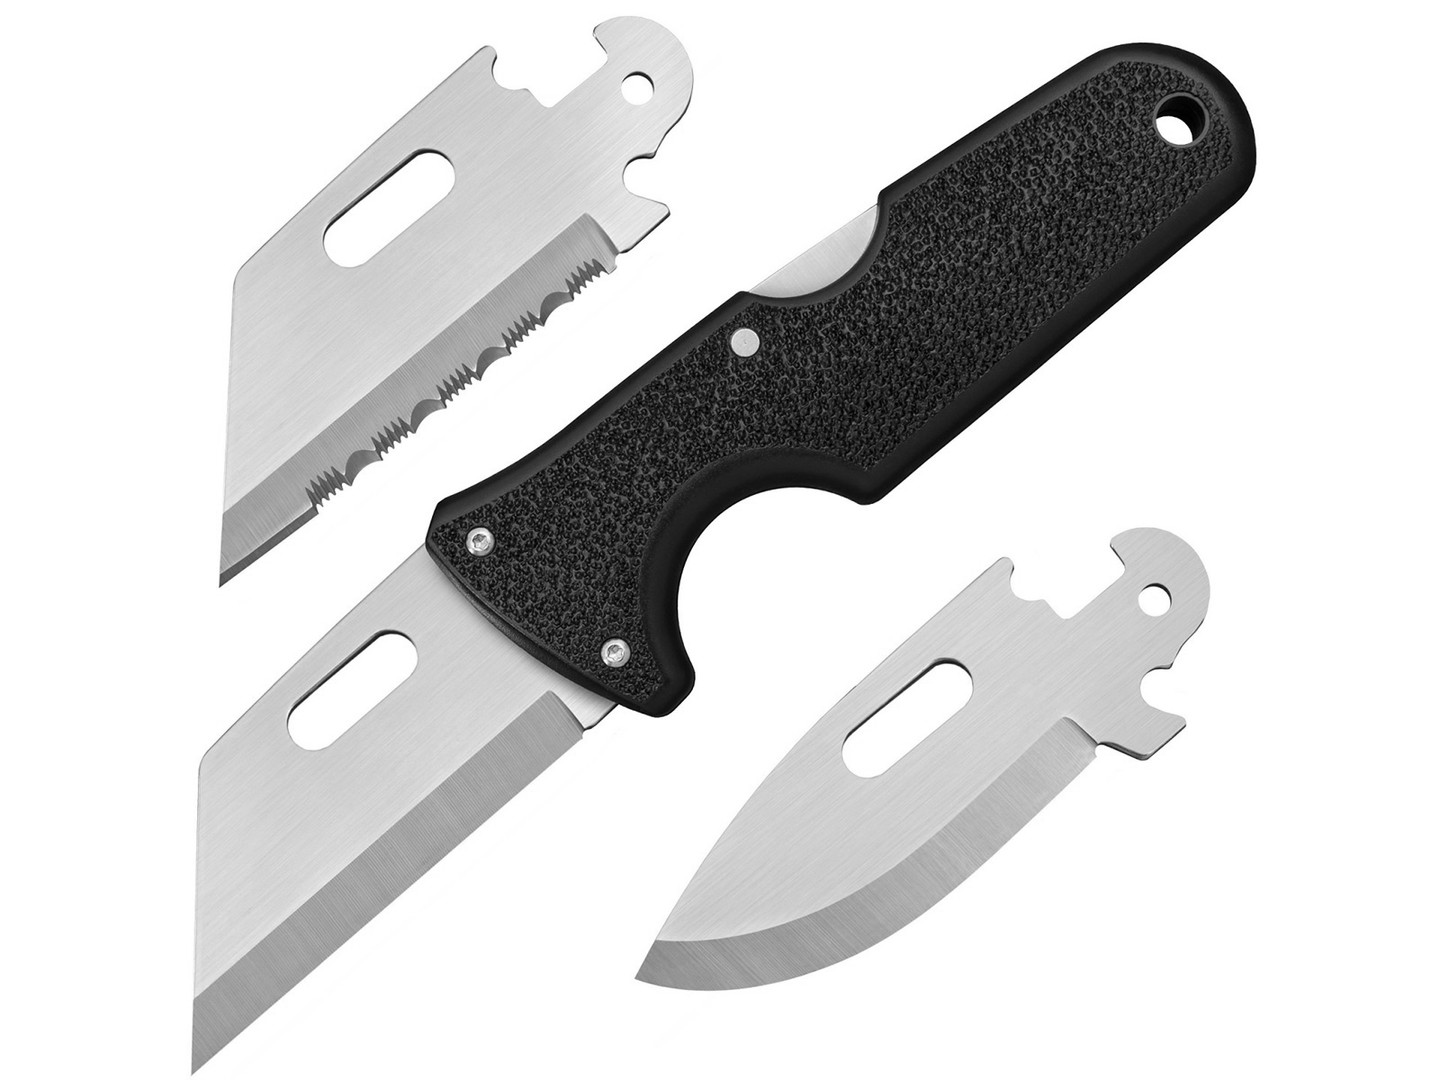 Нож Cold Steel Click N Cut 40A сталь 420J2, рукоять ABS